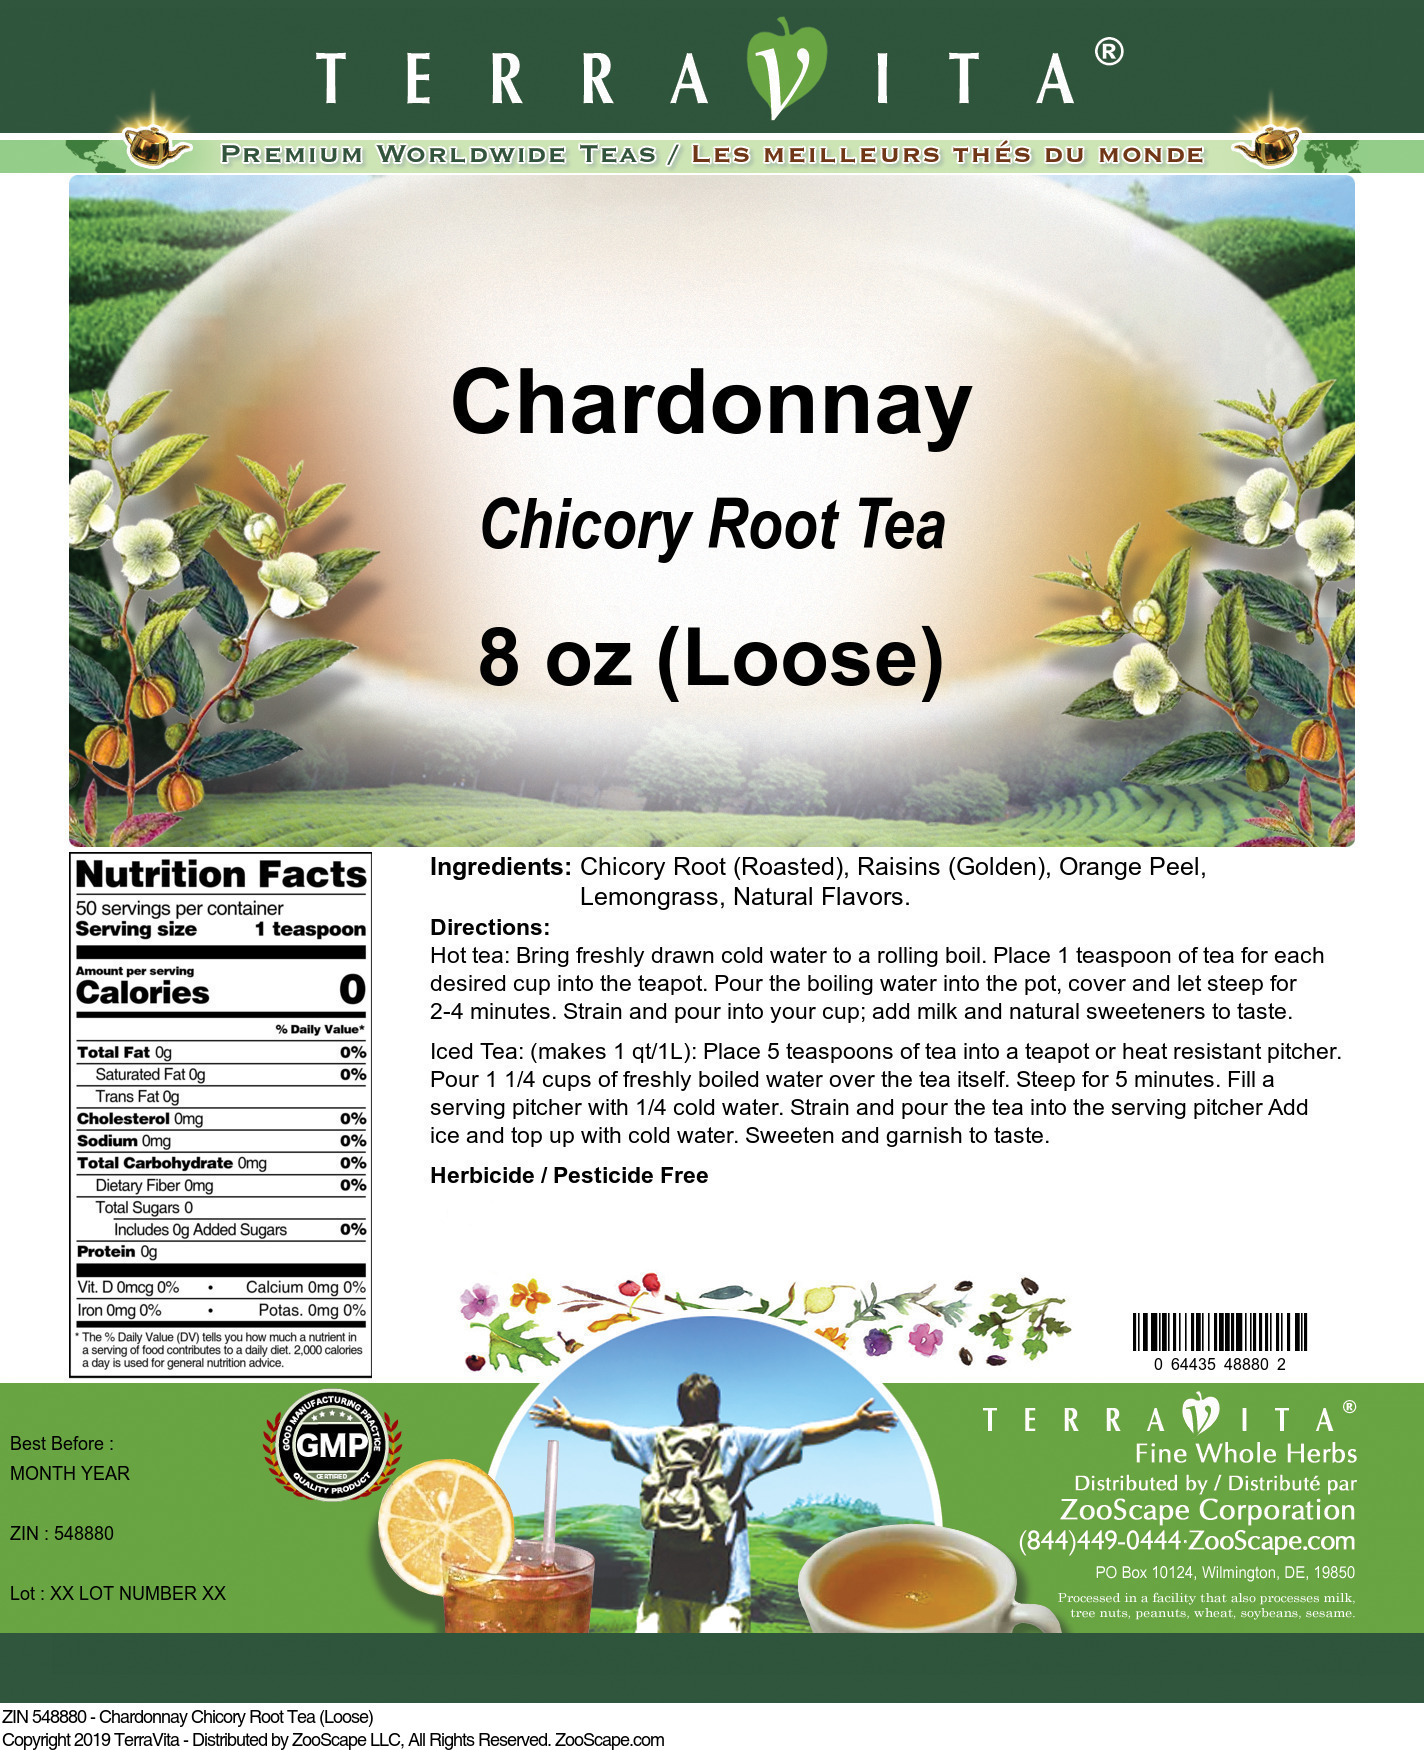 Chardonnay Chicory Root Tea (Loose) - Label